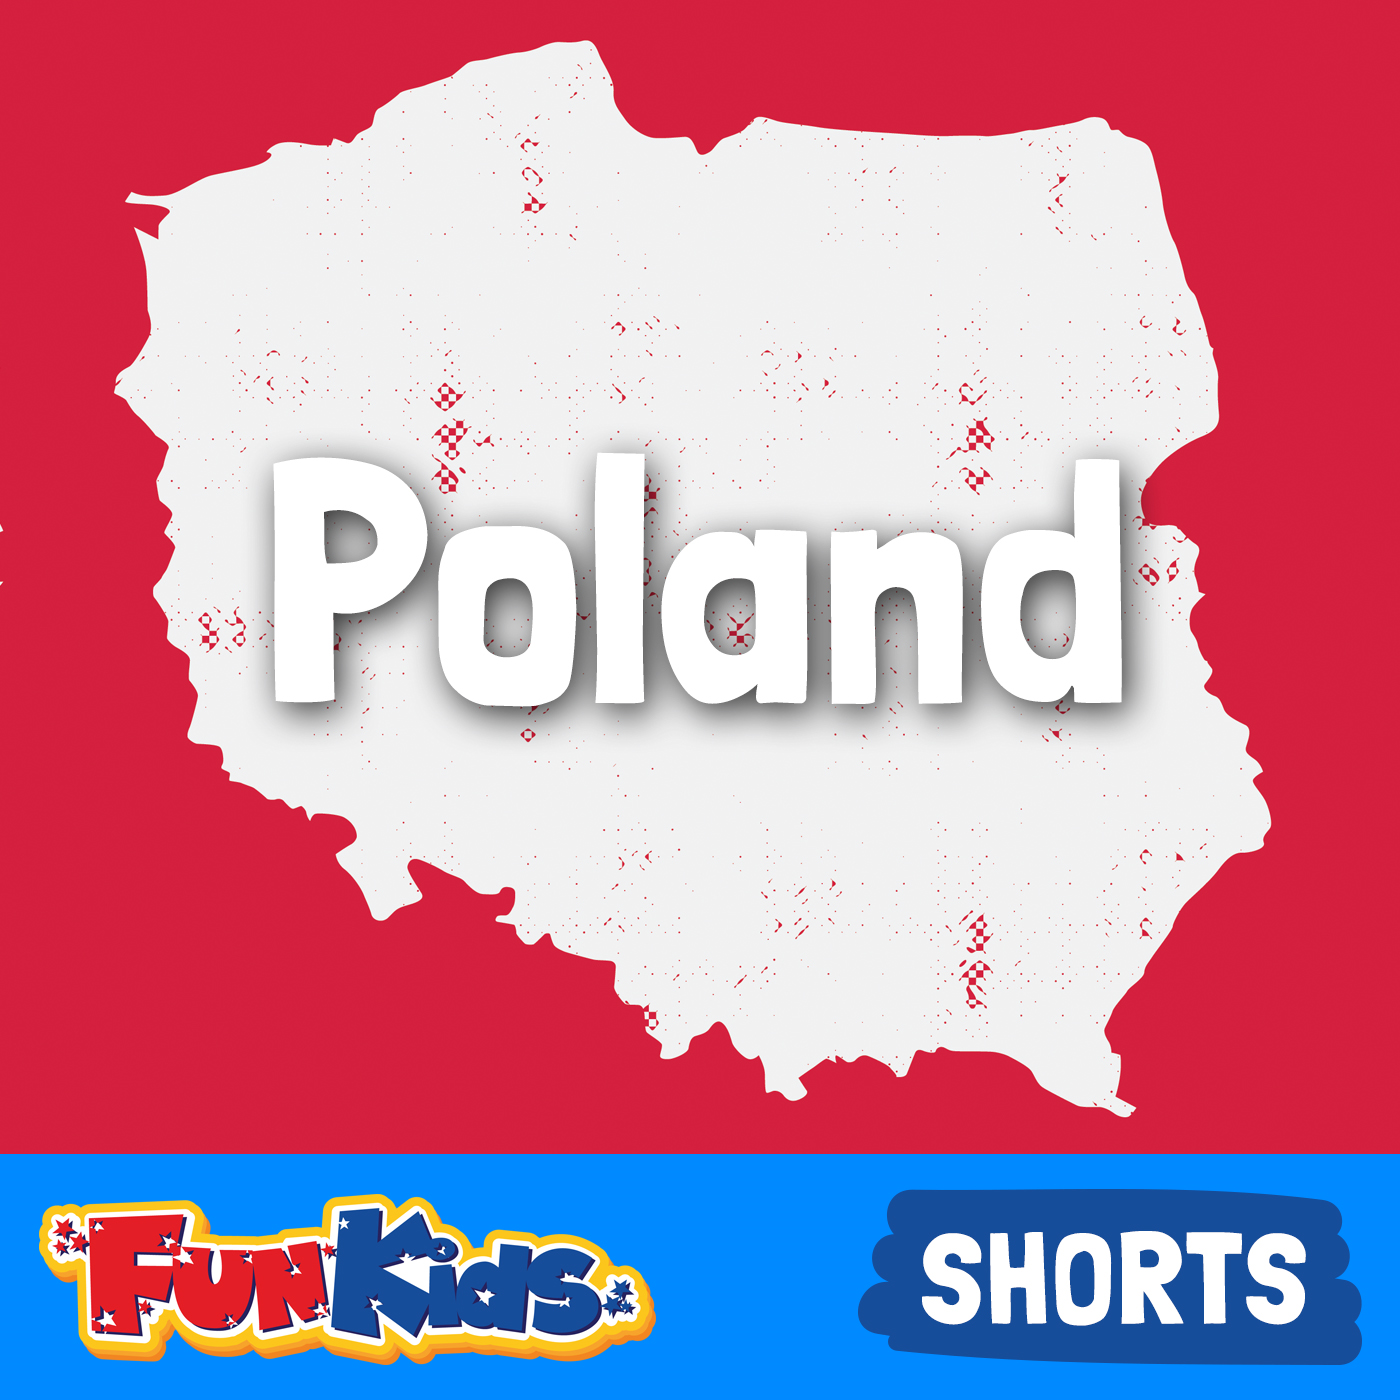 Polish Stories